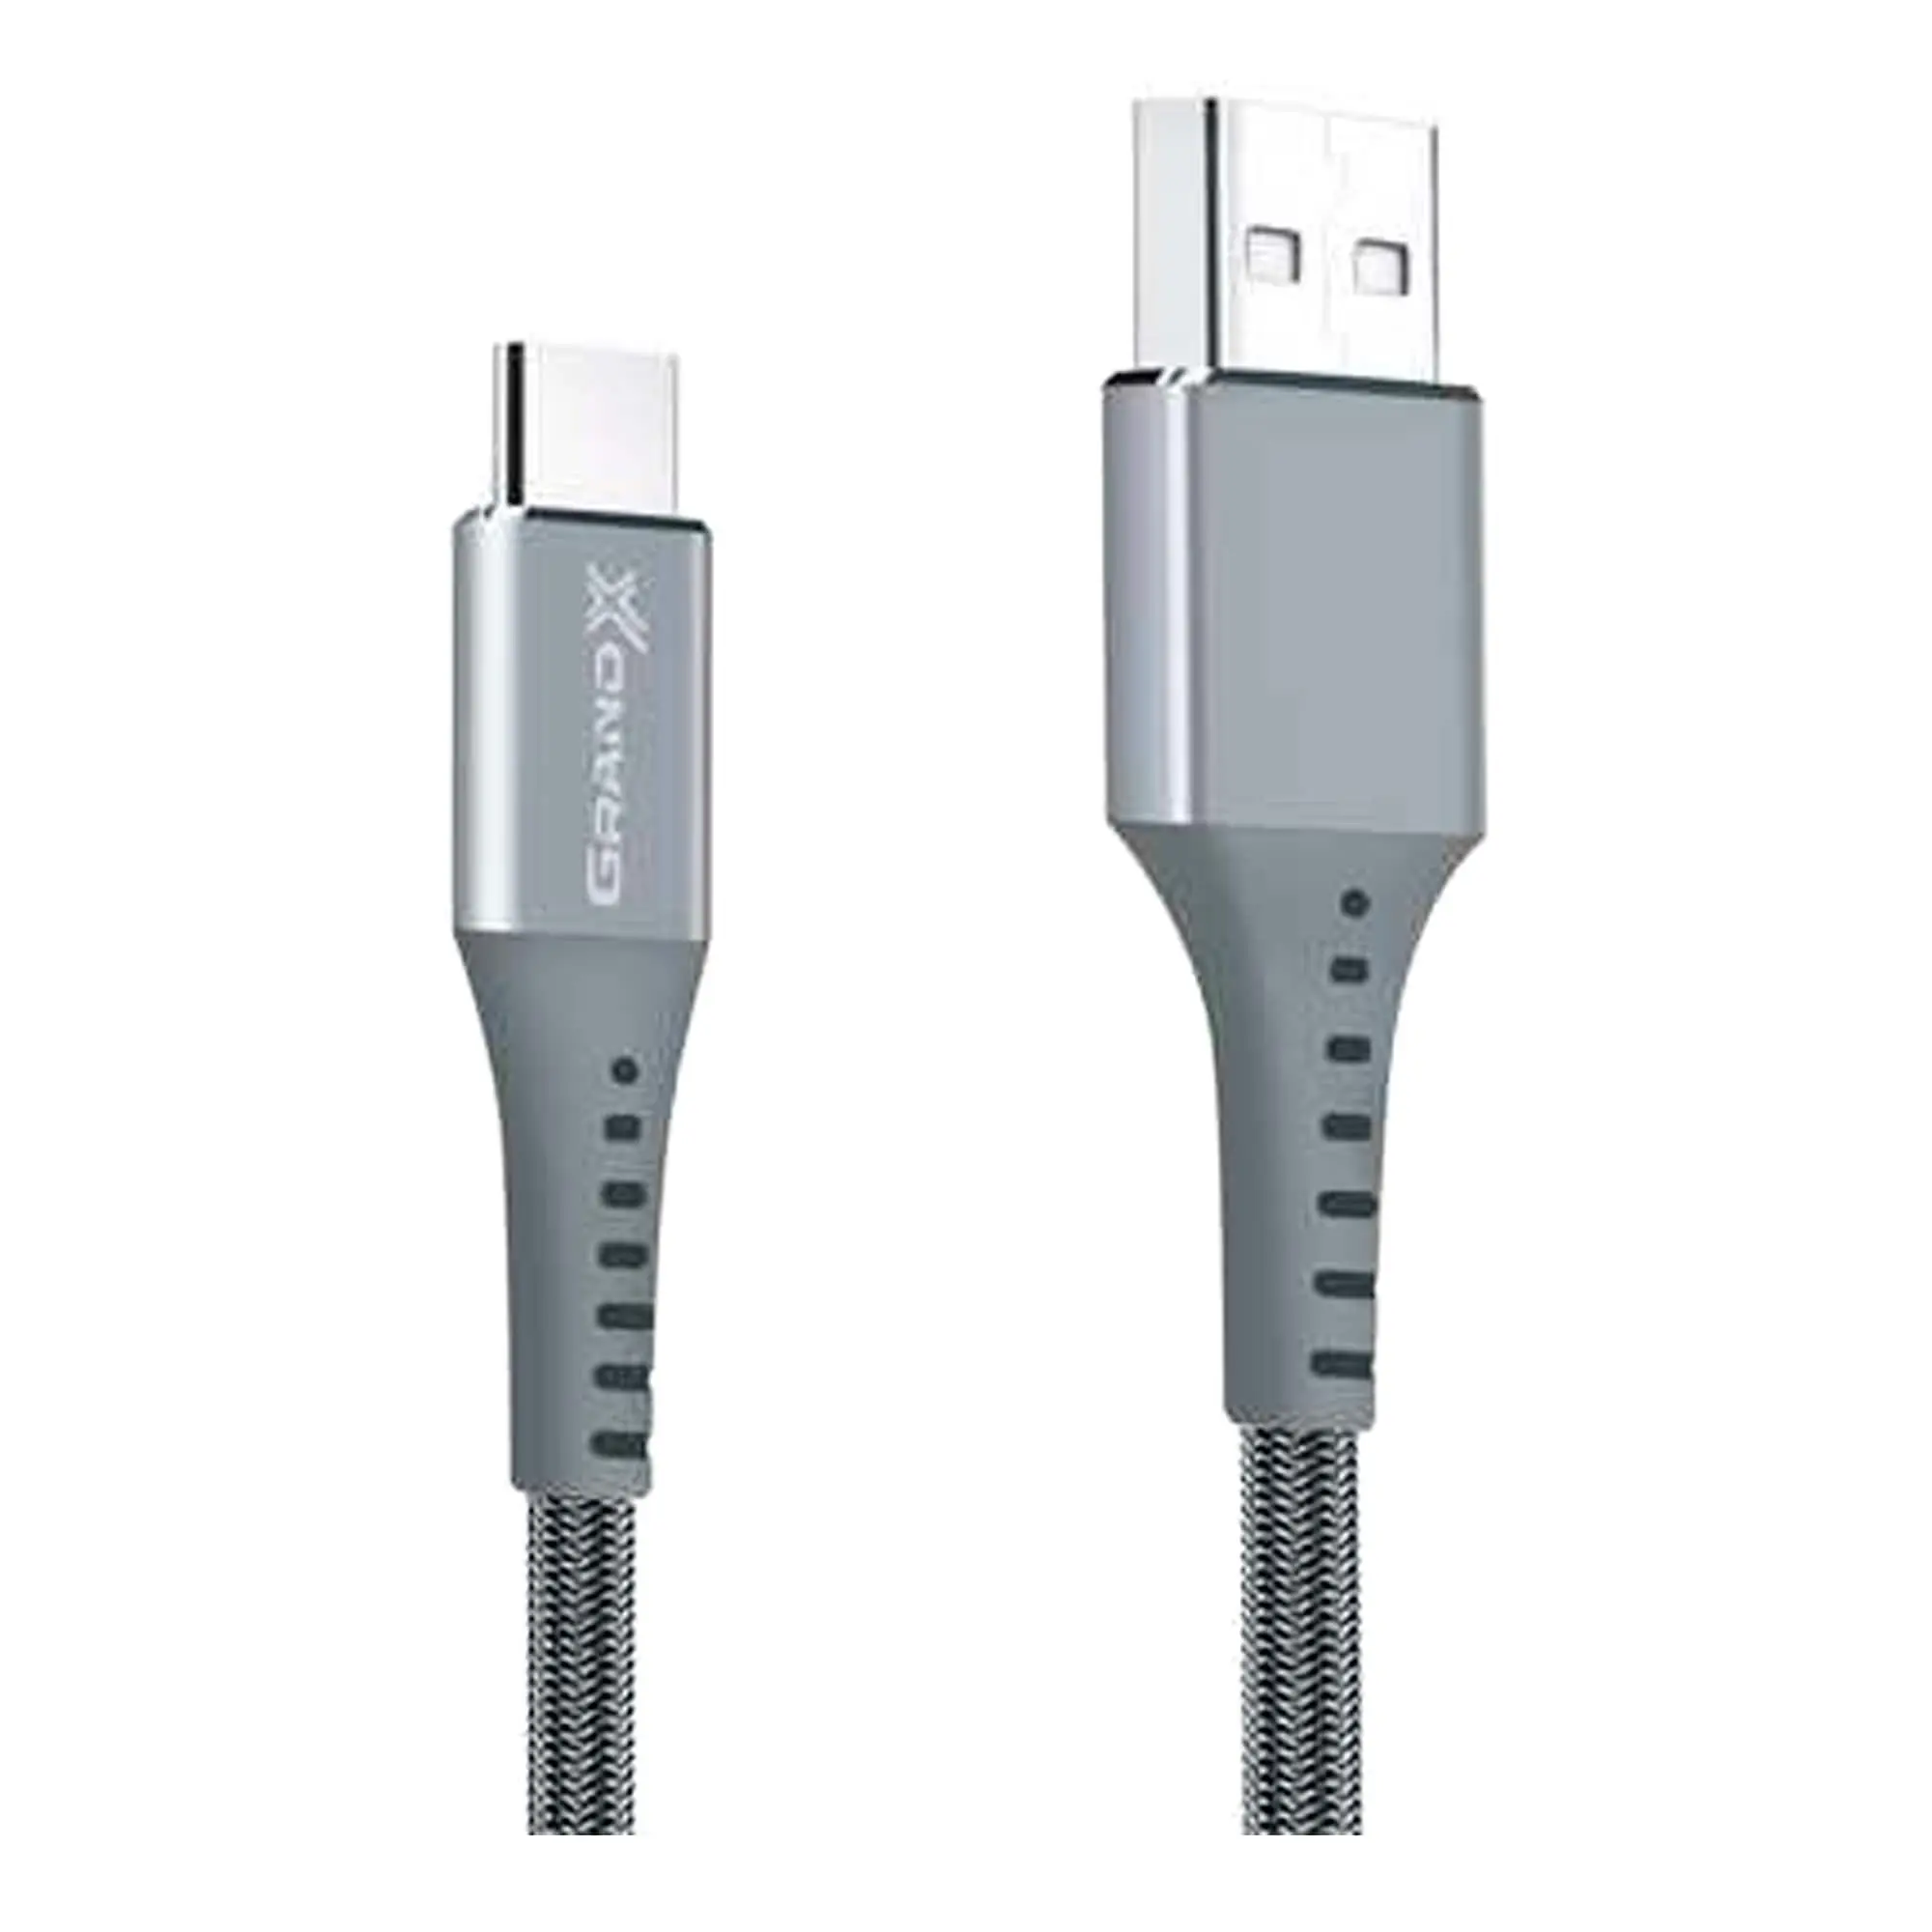 Кабель Grand-X USB-type C 3A, 1.2m, Fast Сharge, Grey толст.нейлон оплетка, премиум BOX (FC-12G)